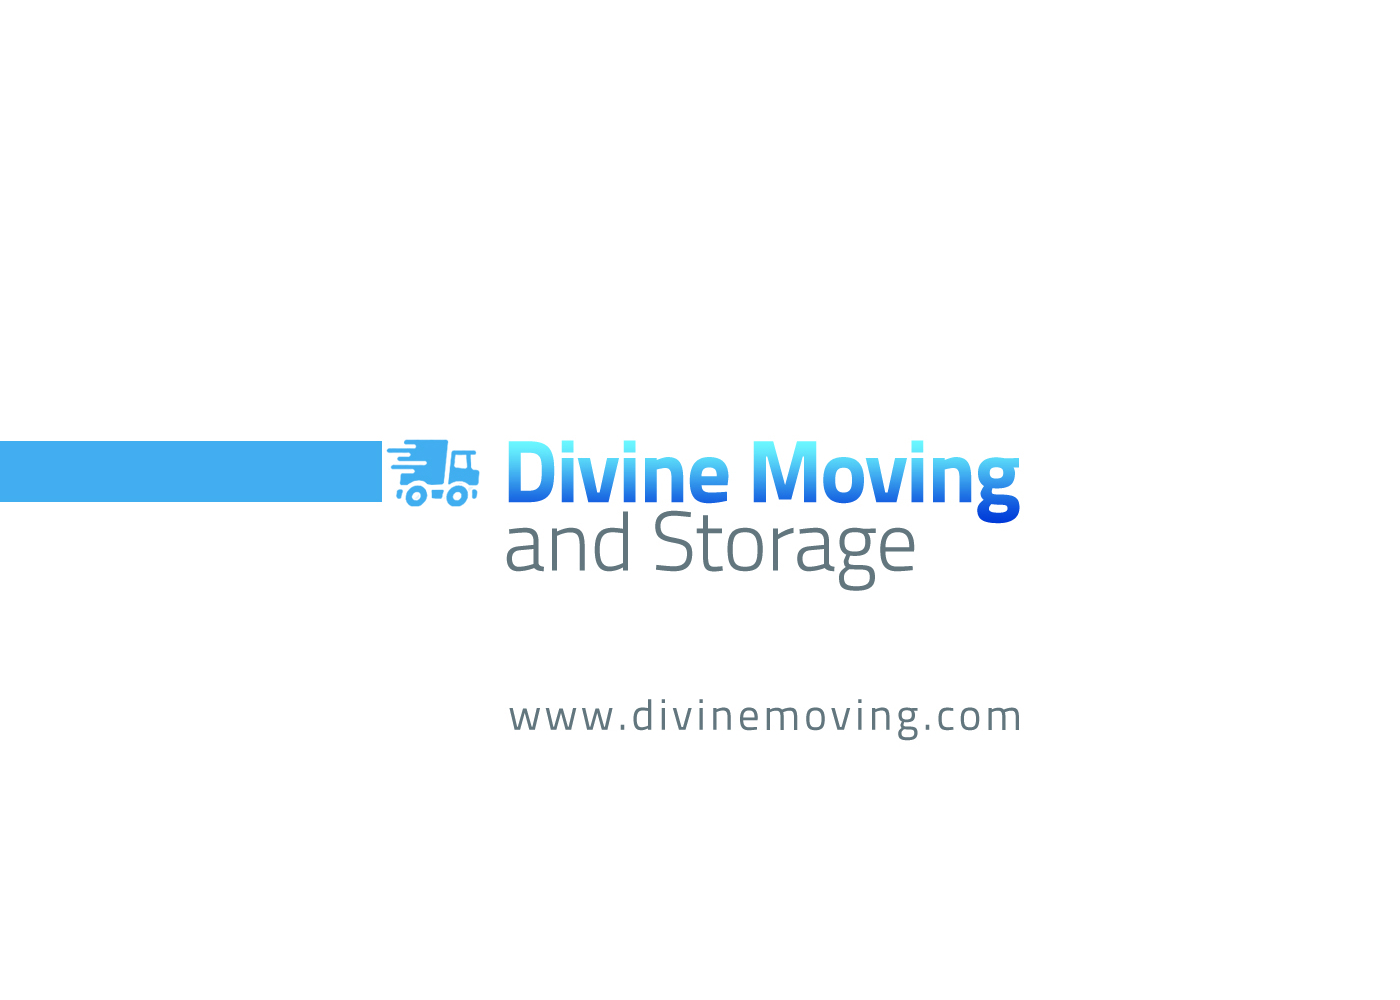 Divine Moving and Storage NYC 1400x1000 LOGO jpeg